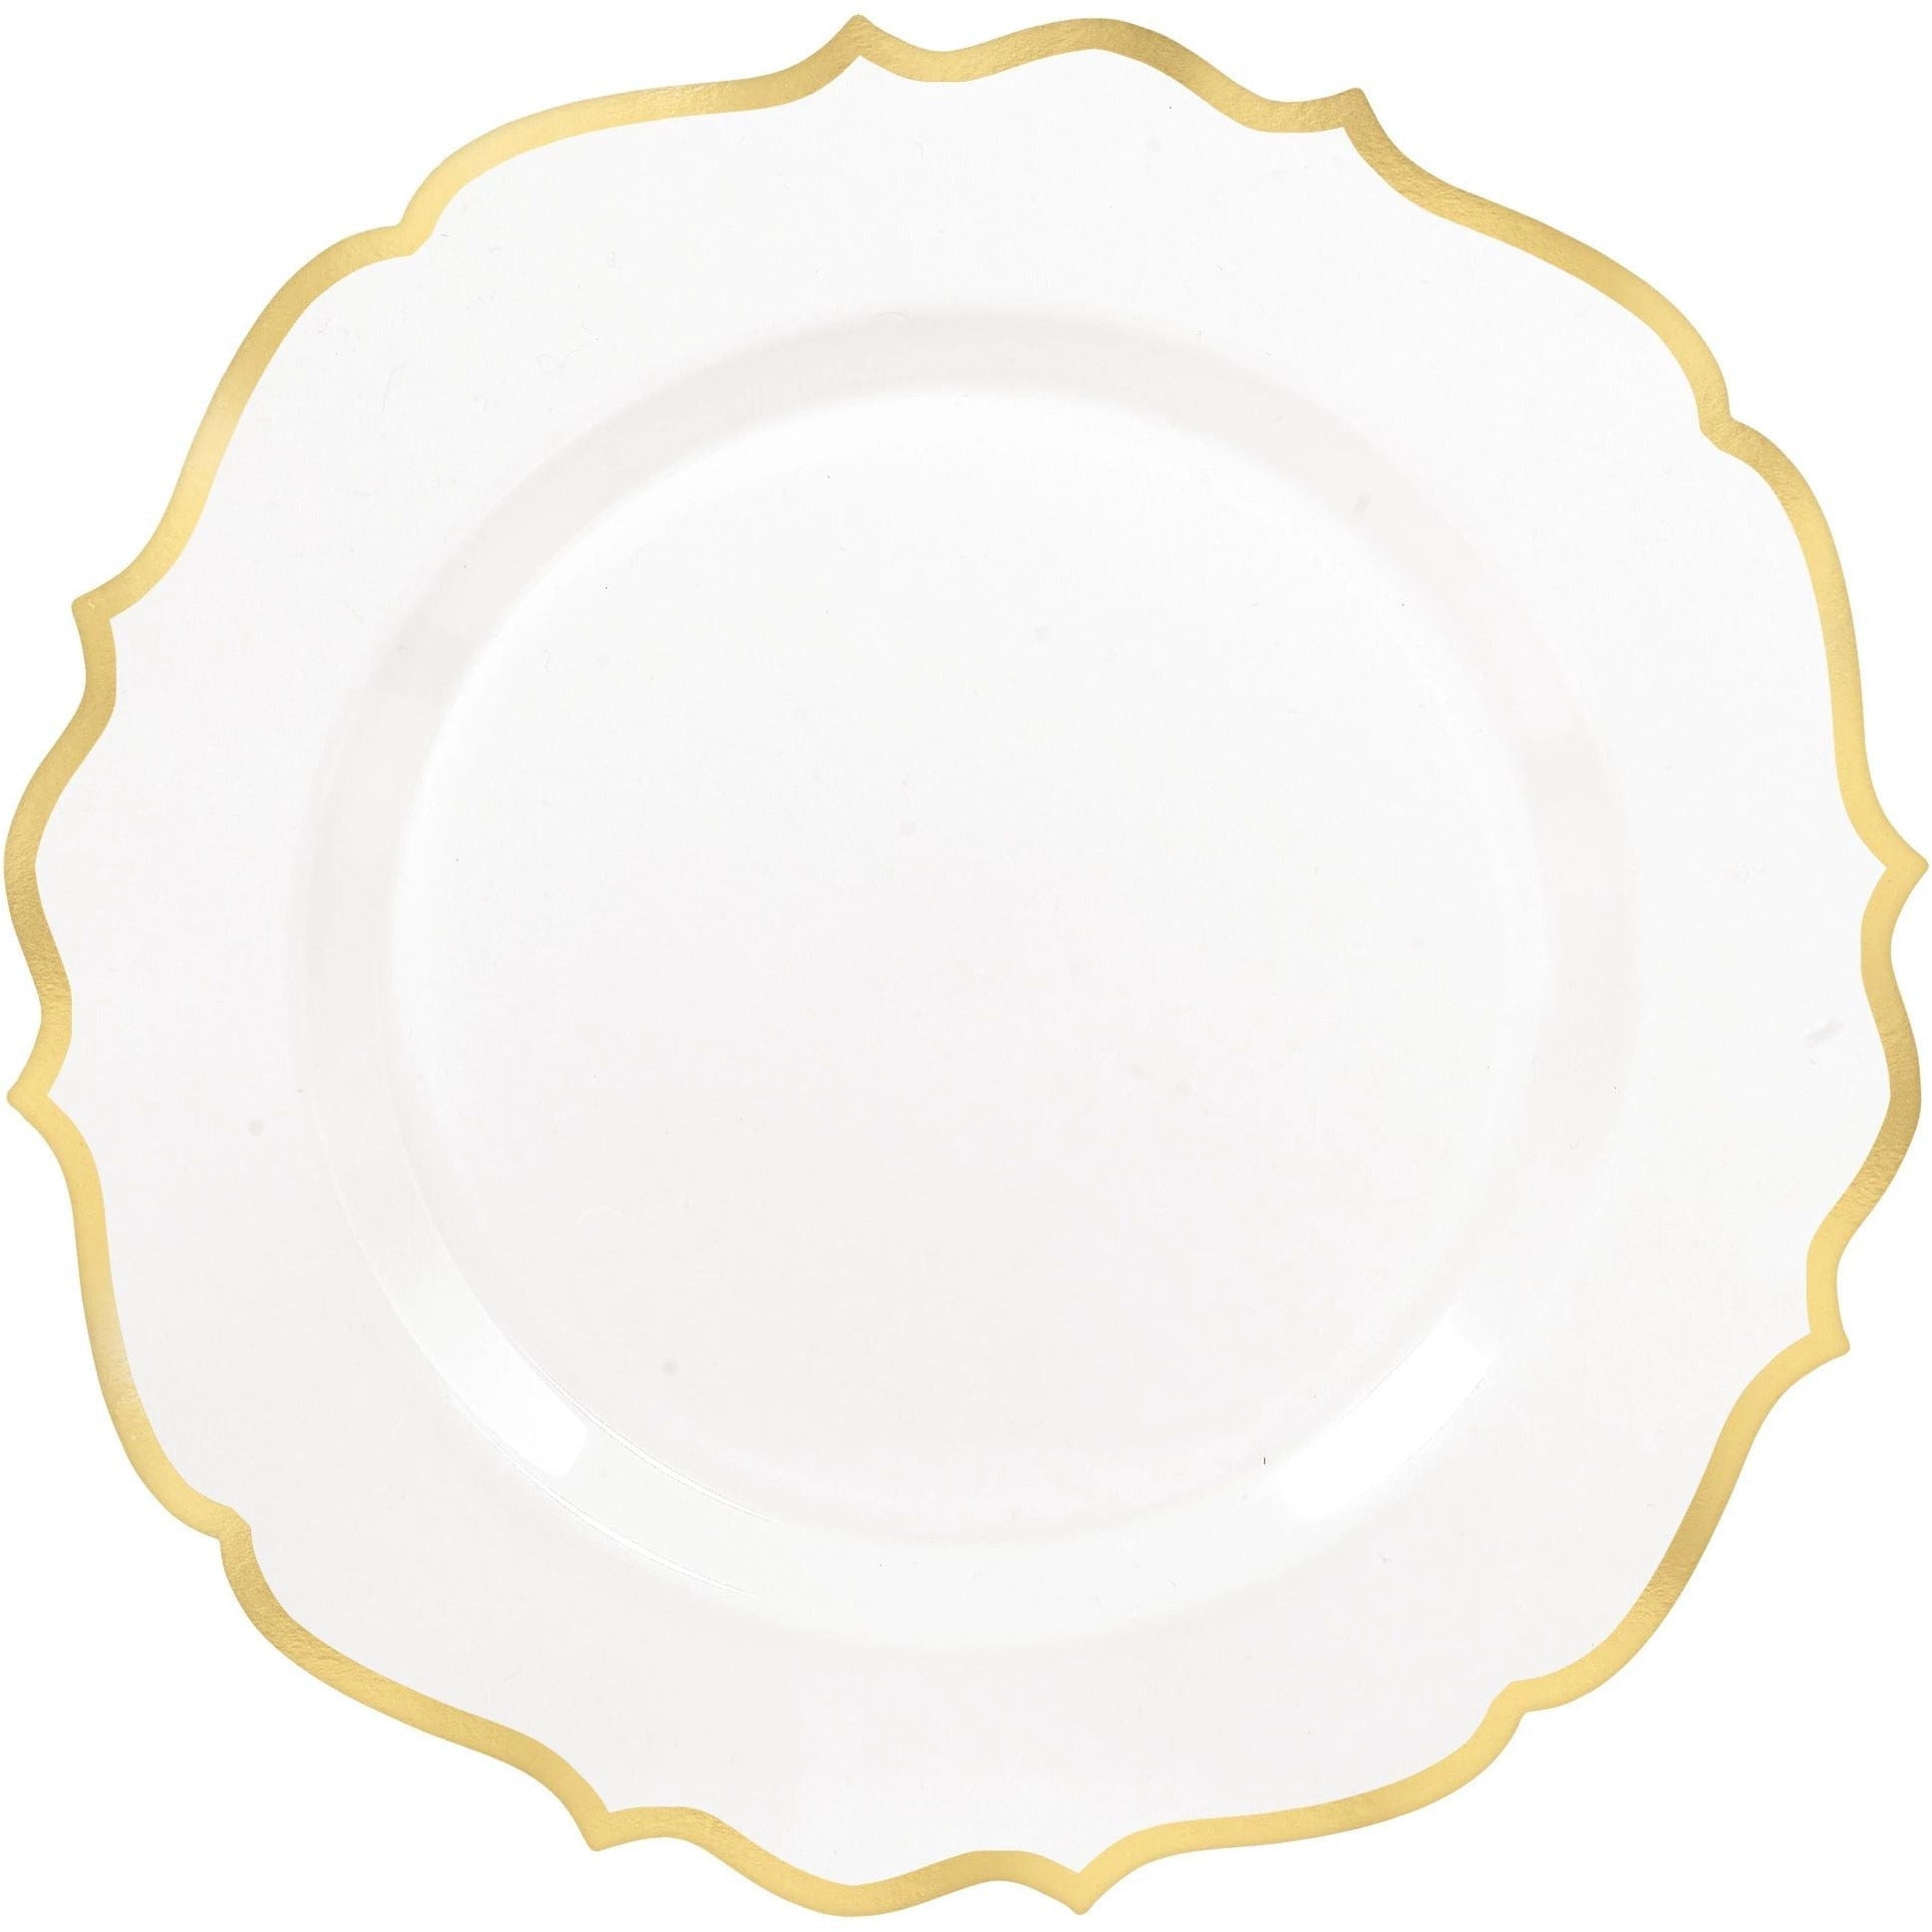 Amscan BASIC Premium 10 1/2" Ornate Plastic Plate w/ Gold Trim